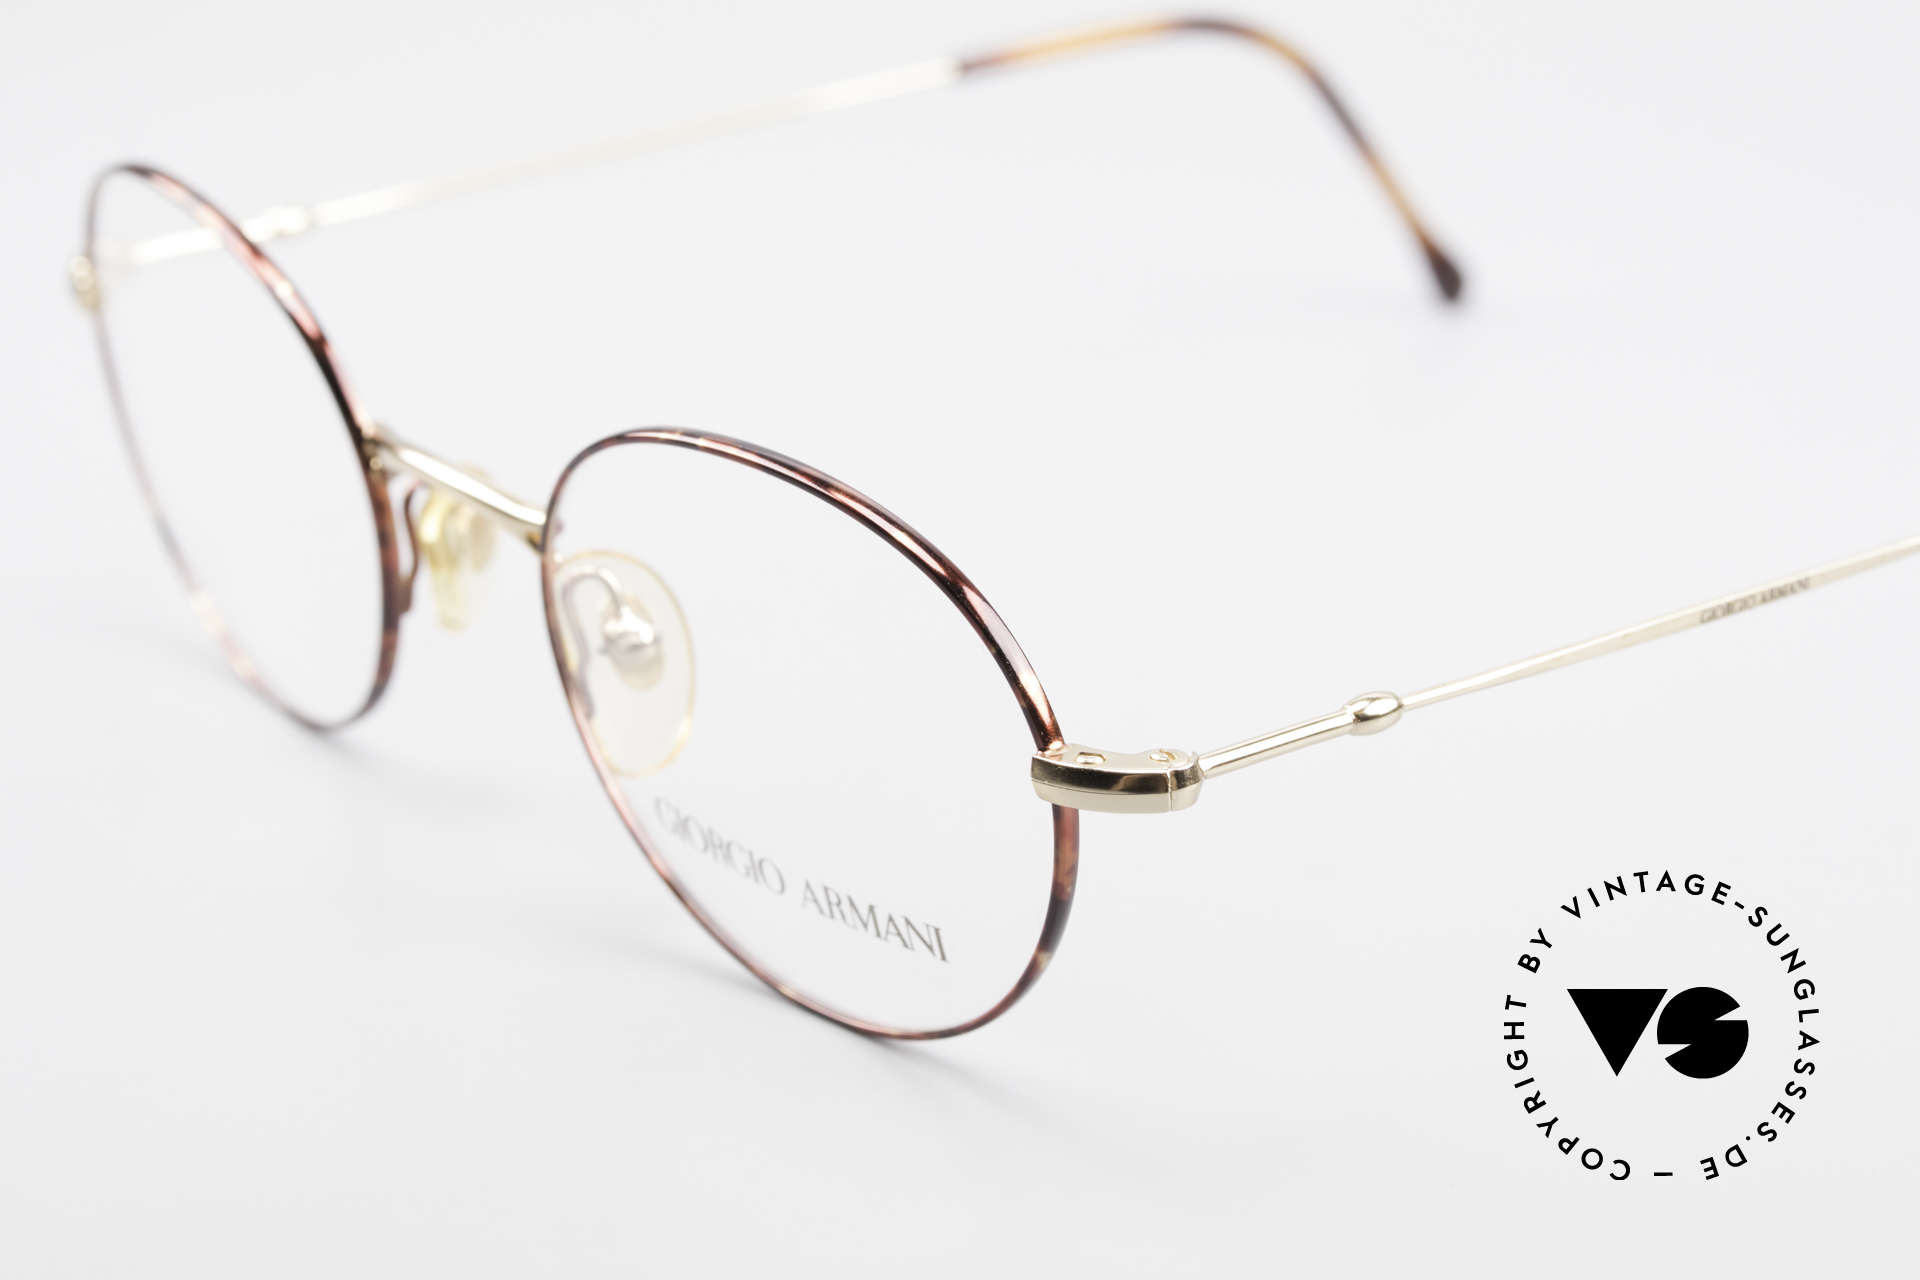 Glasses Giorgio Armani 252 Oval Vintage Eyeglasses 90s